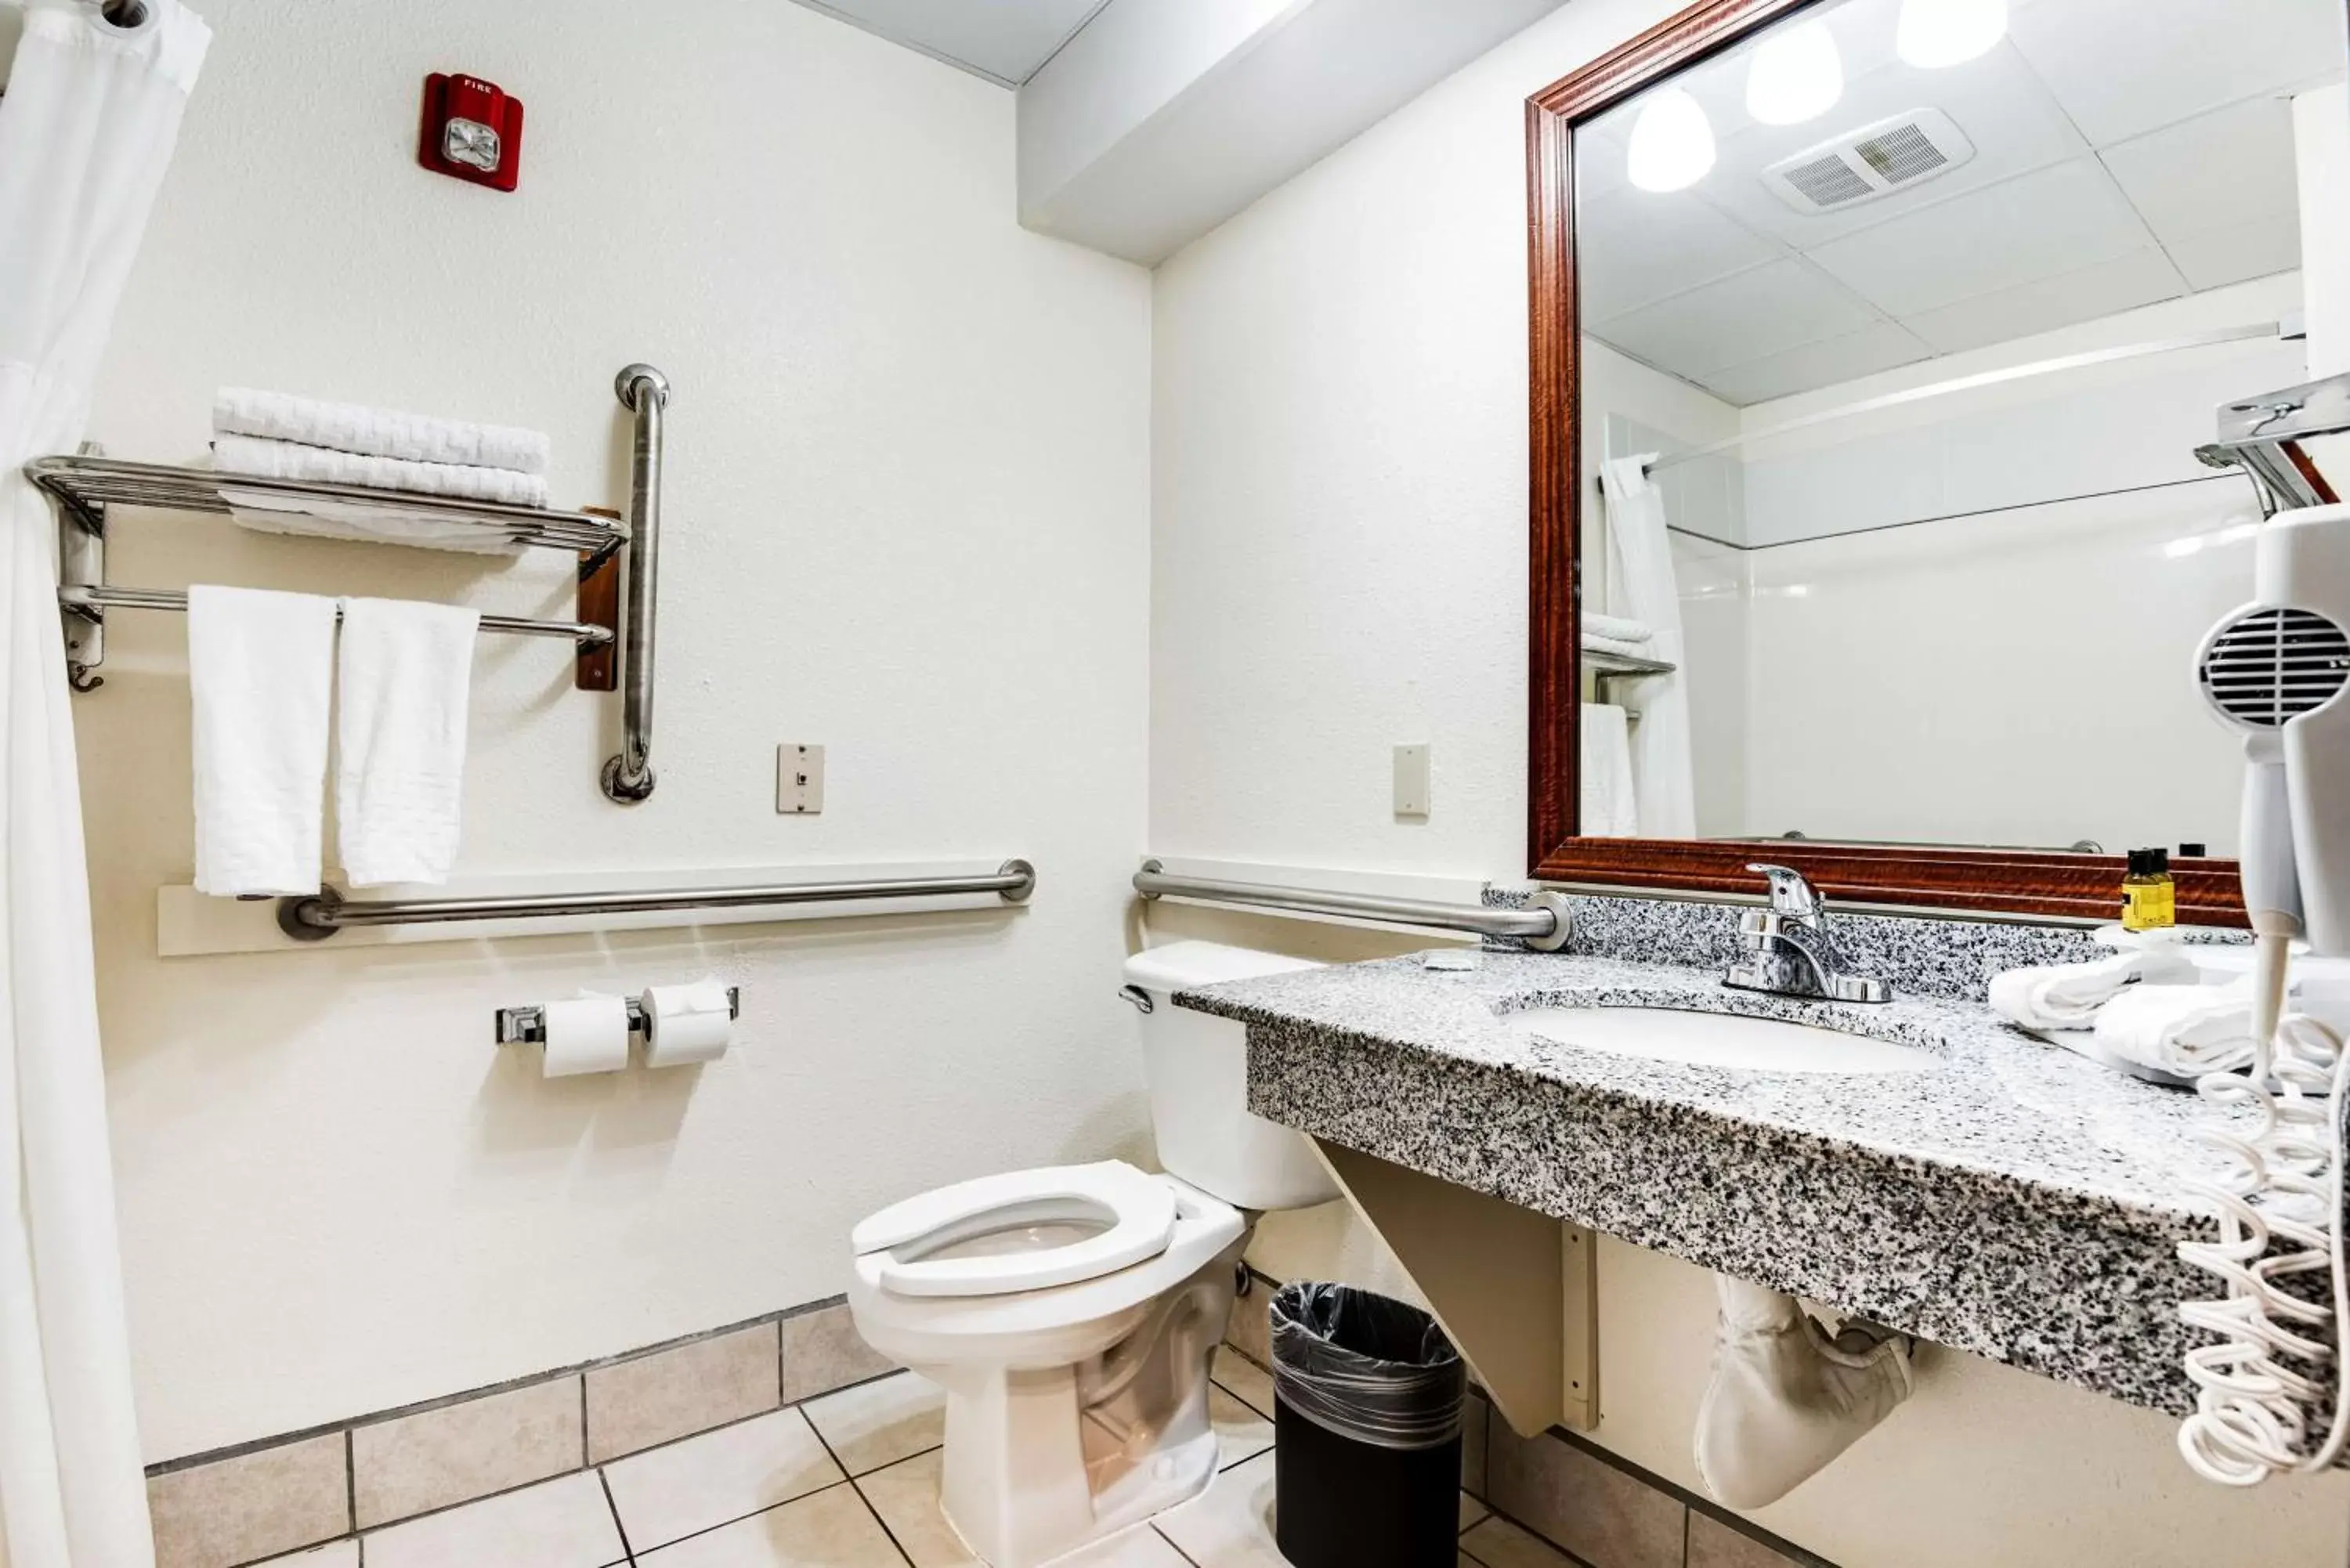 Photo of the whole room, Bathroom in Best Western Firestone Inn & Suites